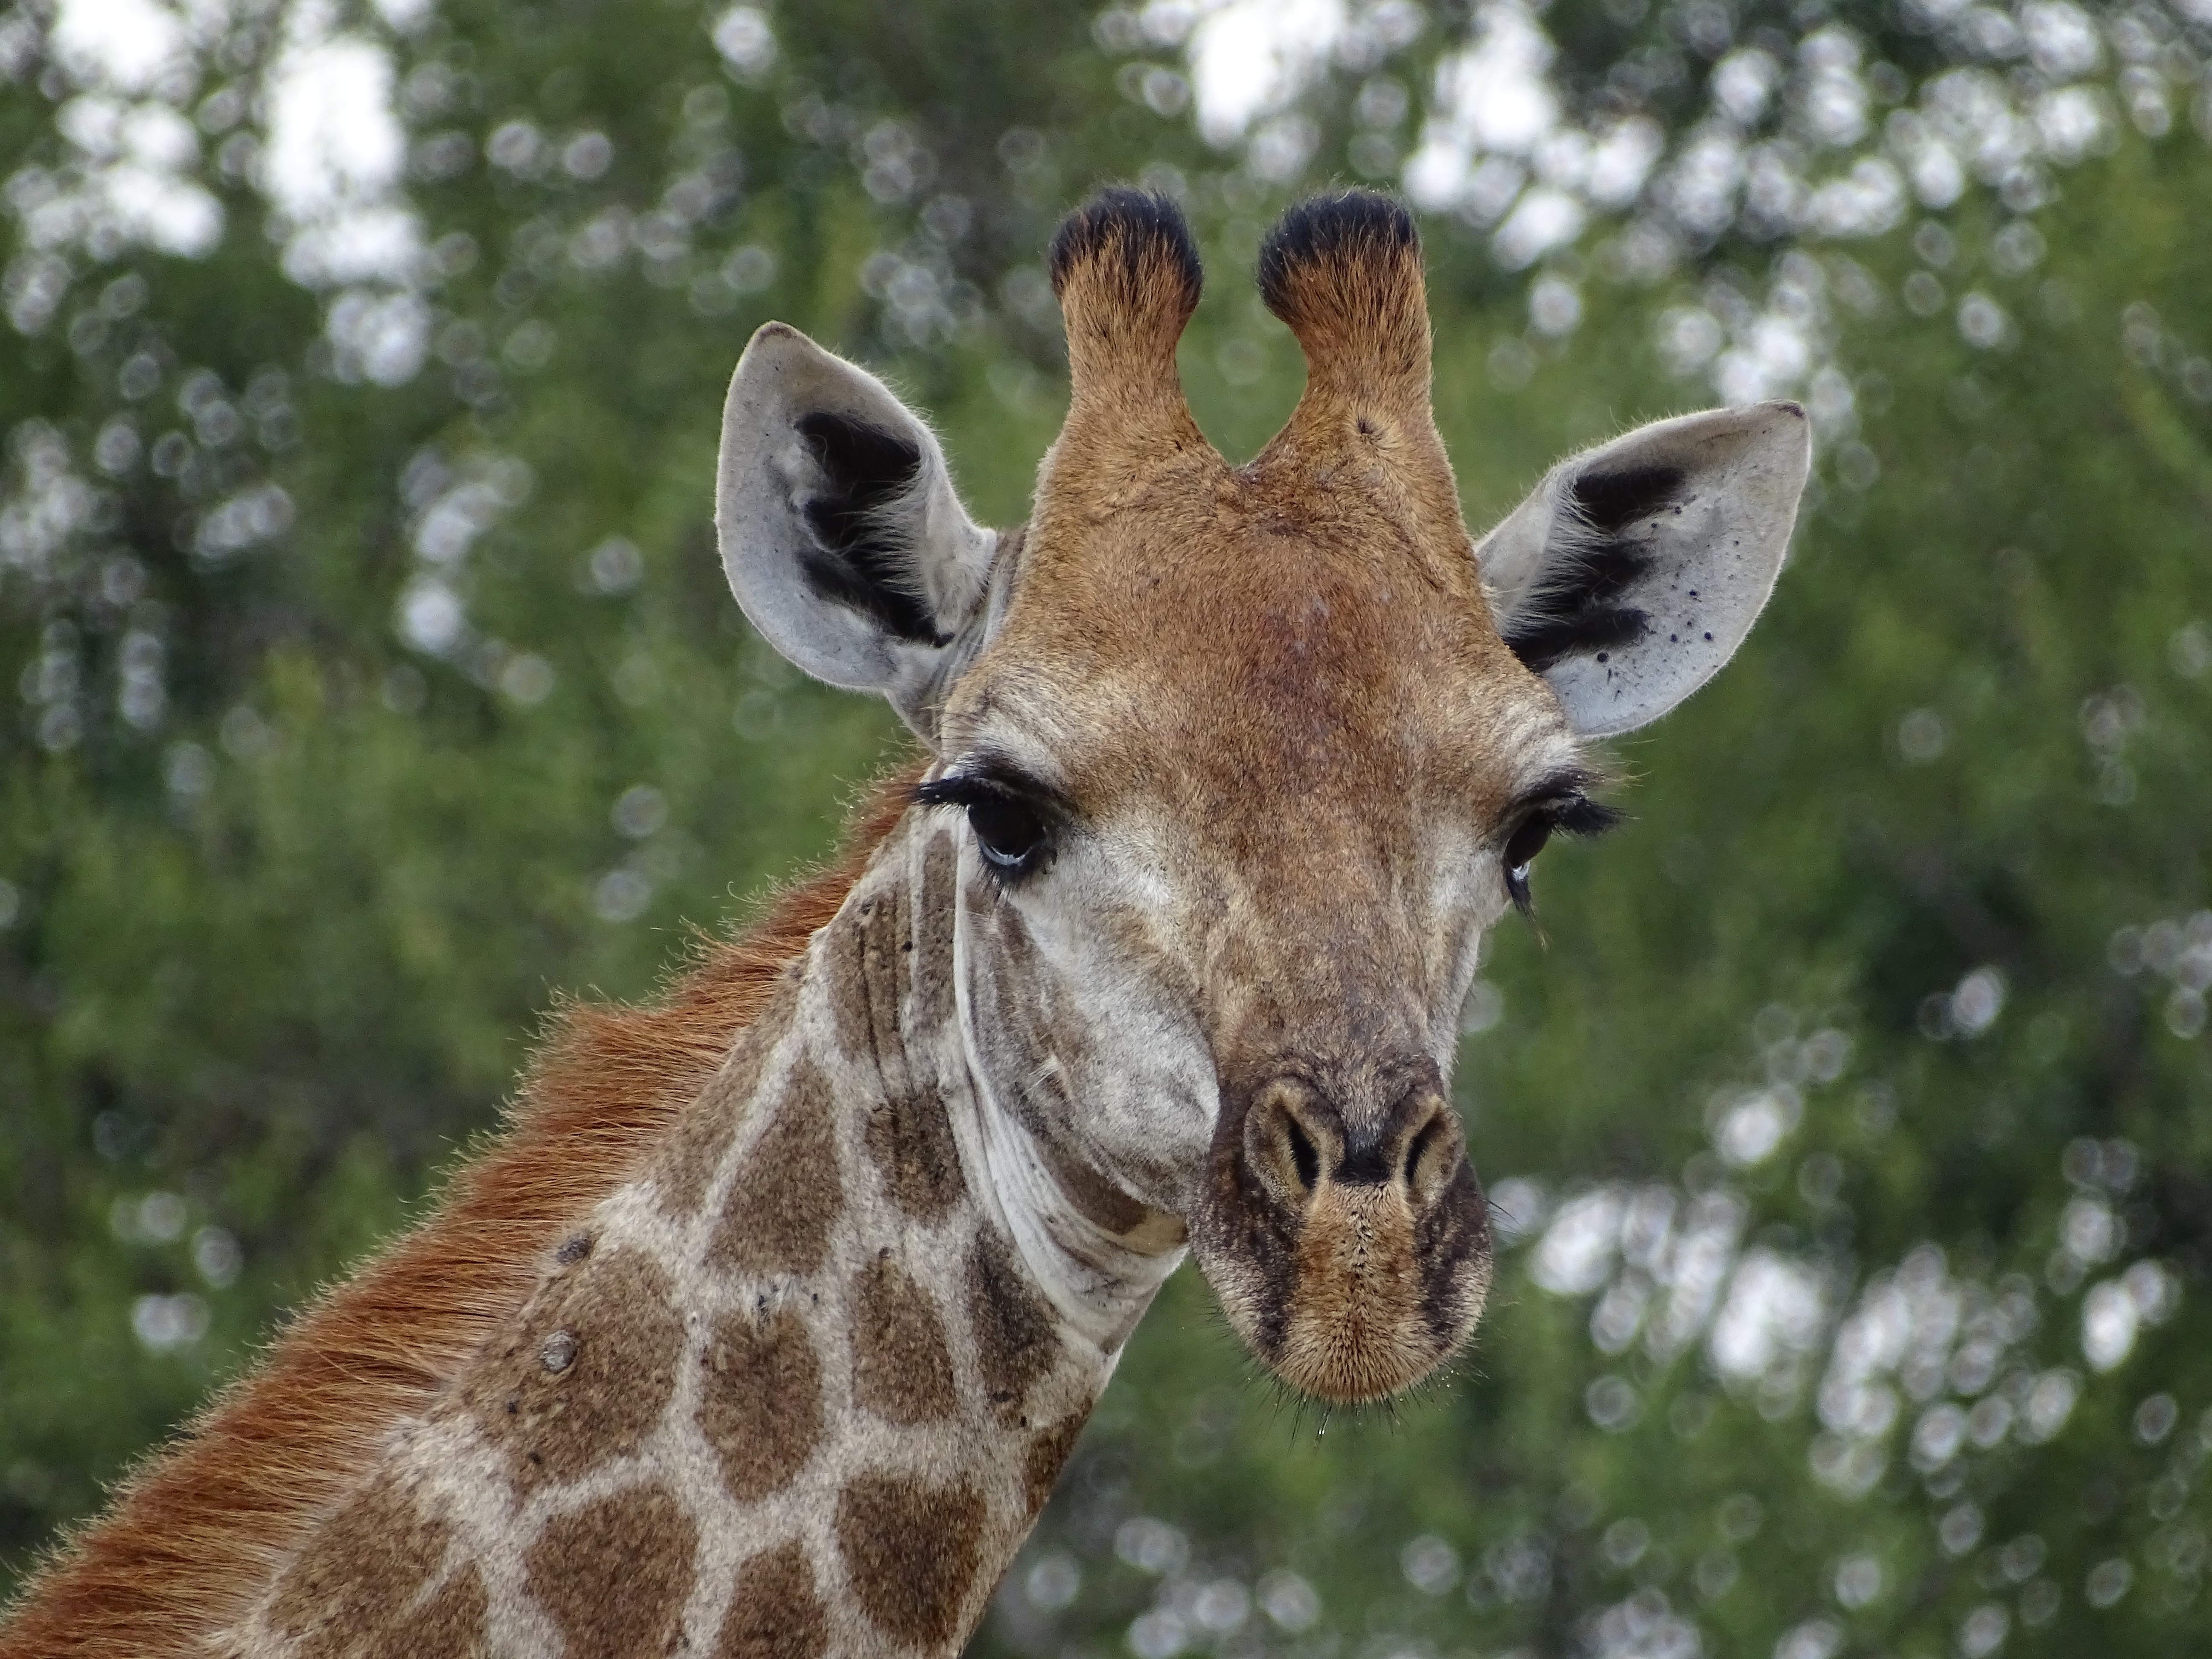 giraffe head selective photography during daytime